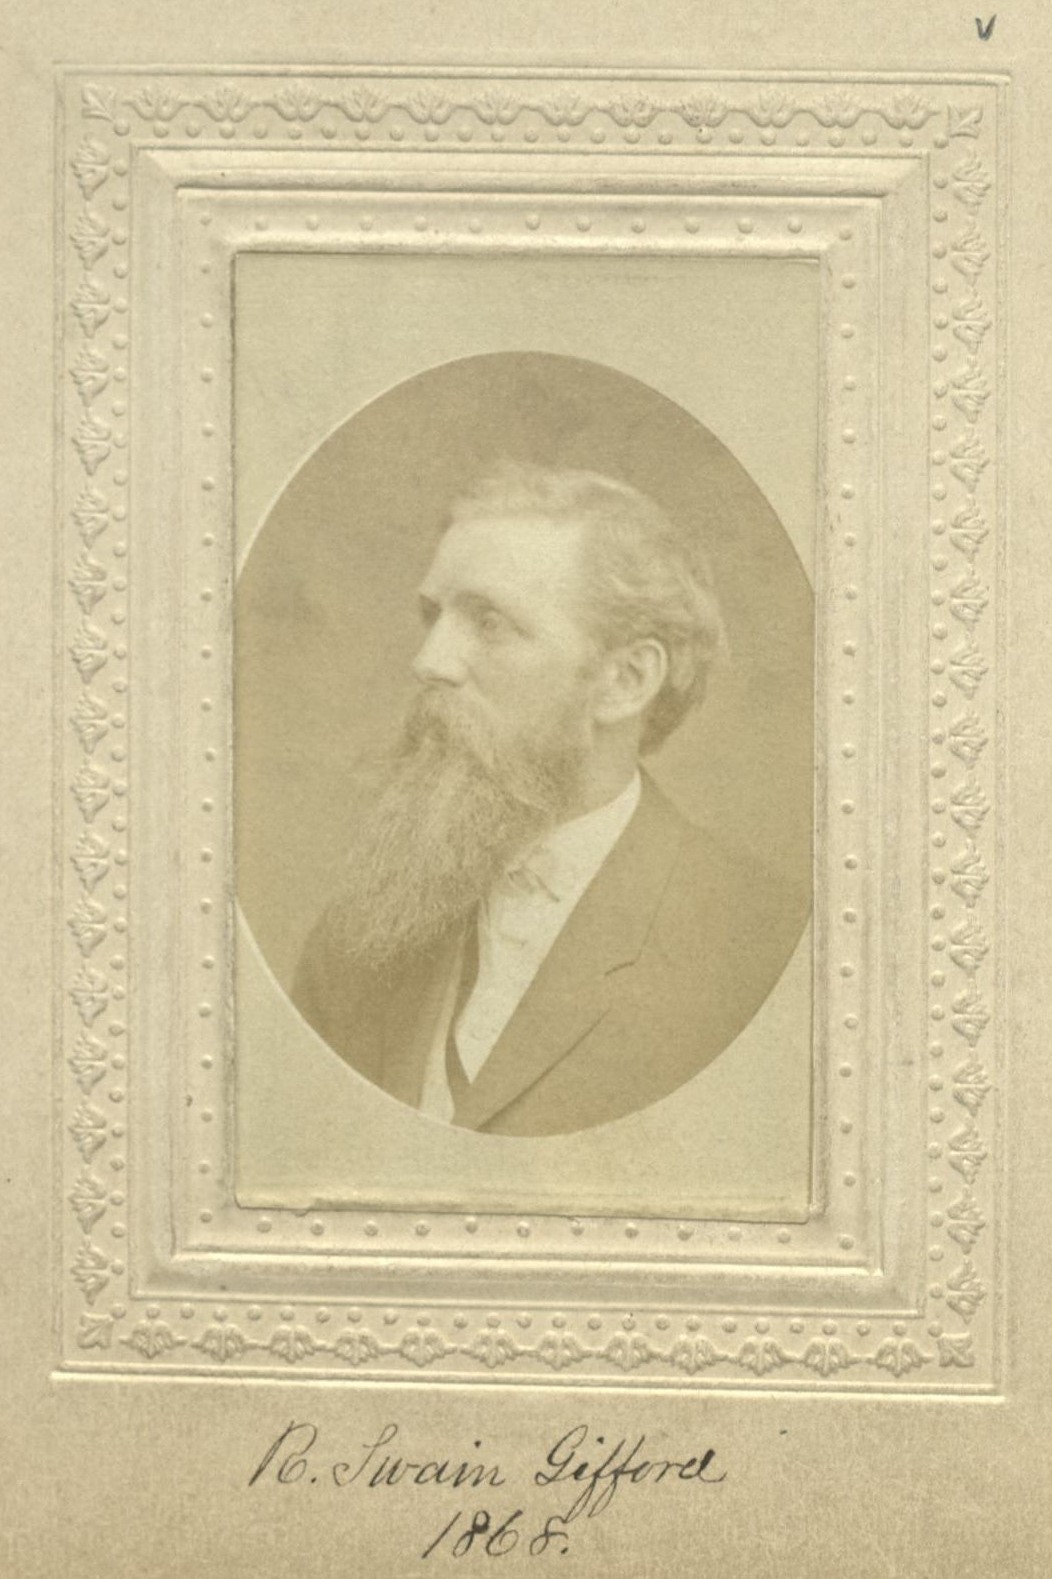 Member portrait of R. Swain Gifford